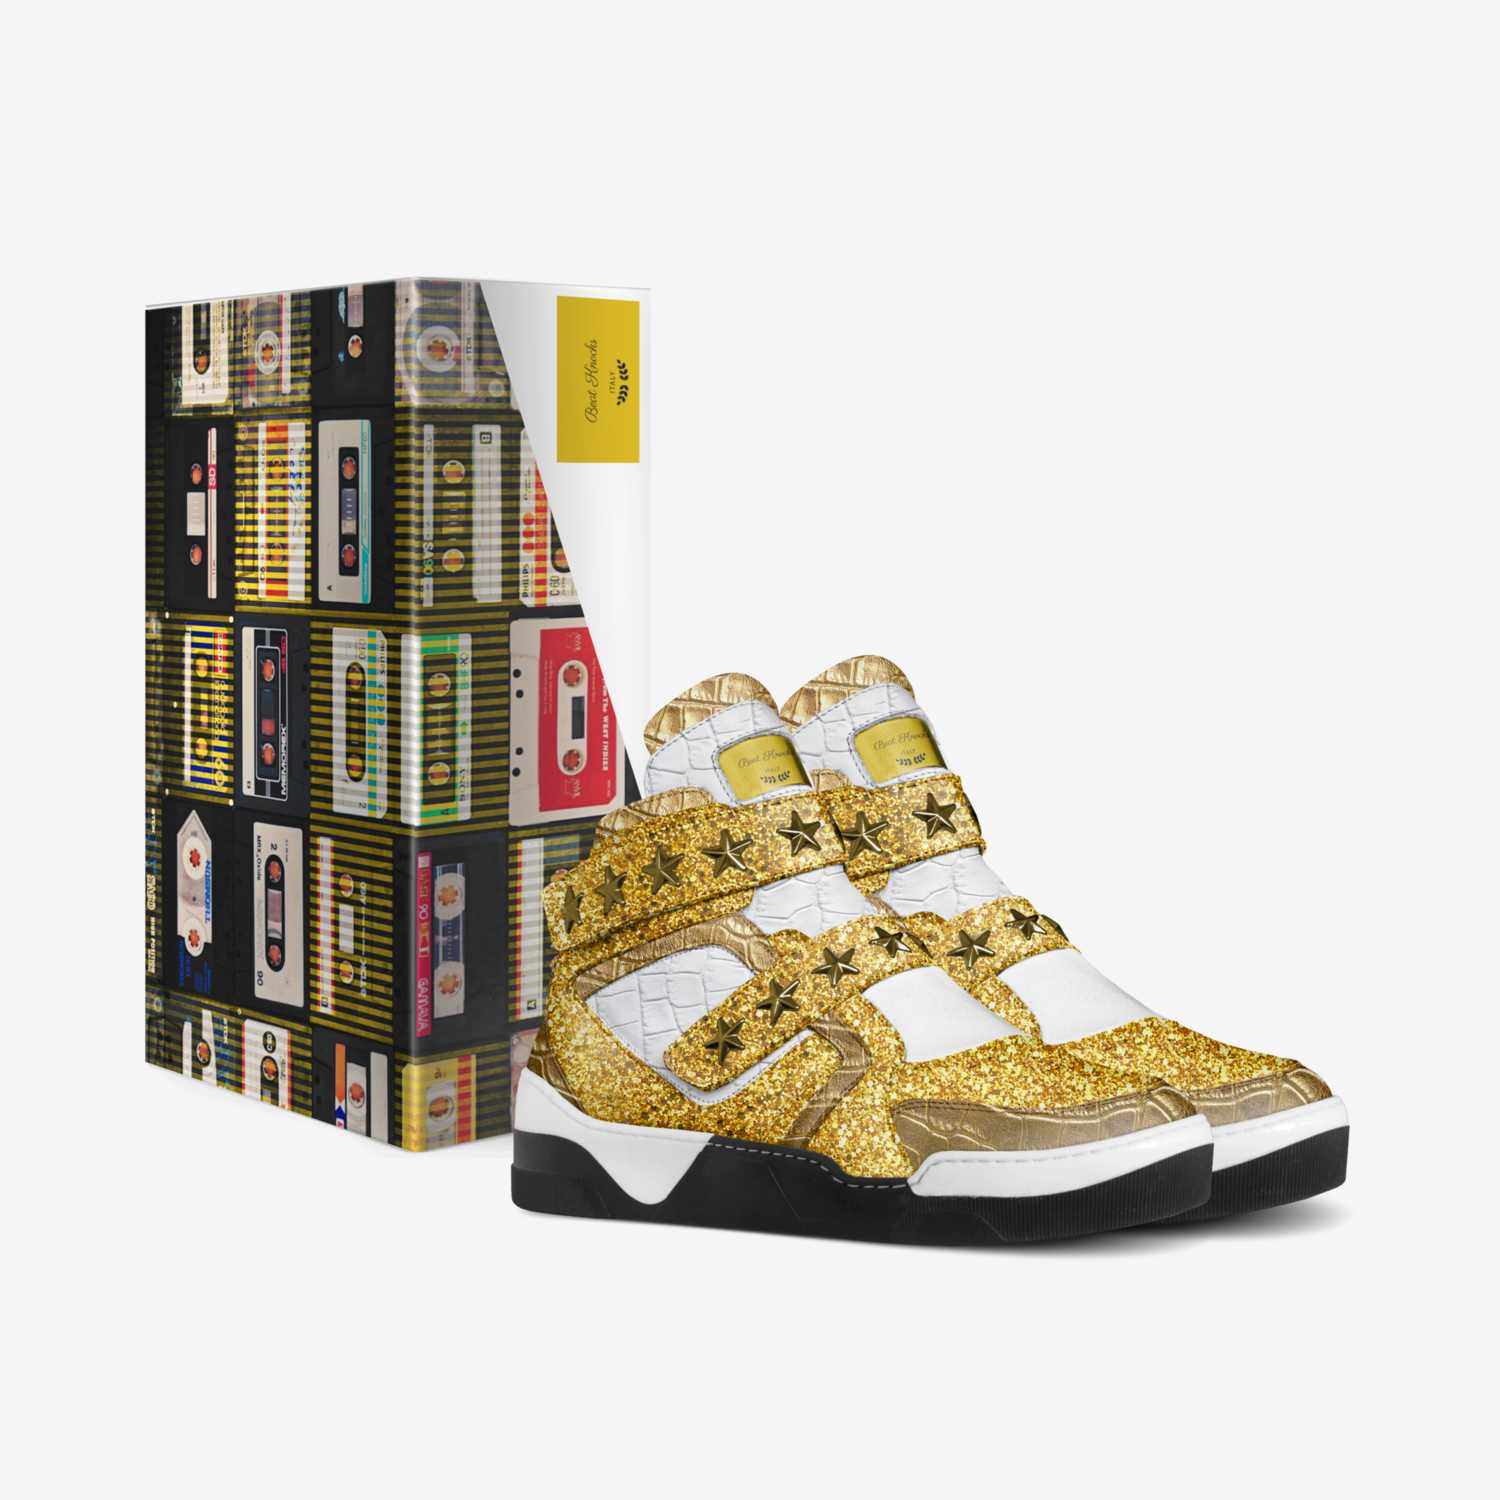 Beat Knocks custom made in Italy shoes by Latotsha Gwynn | Box view